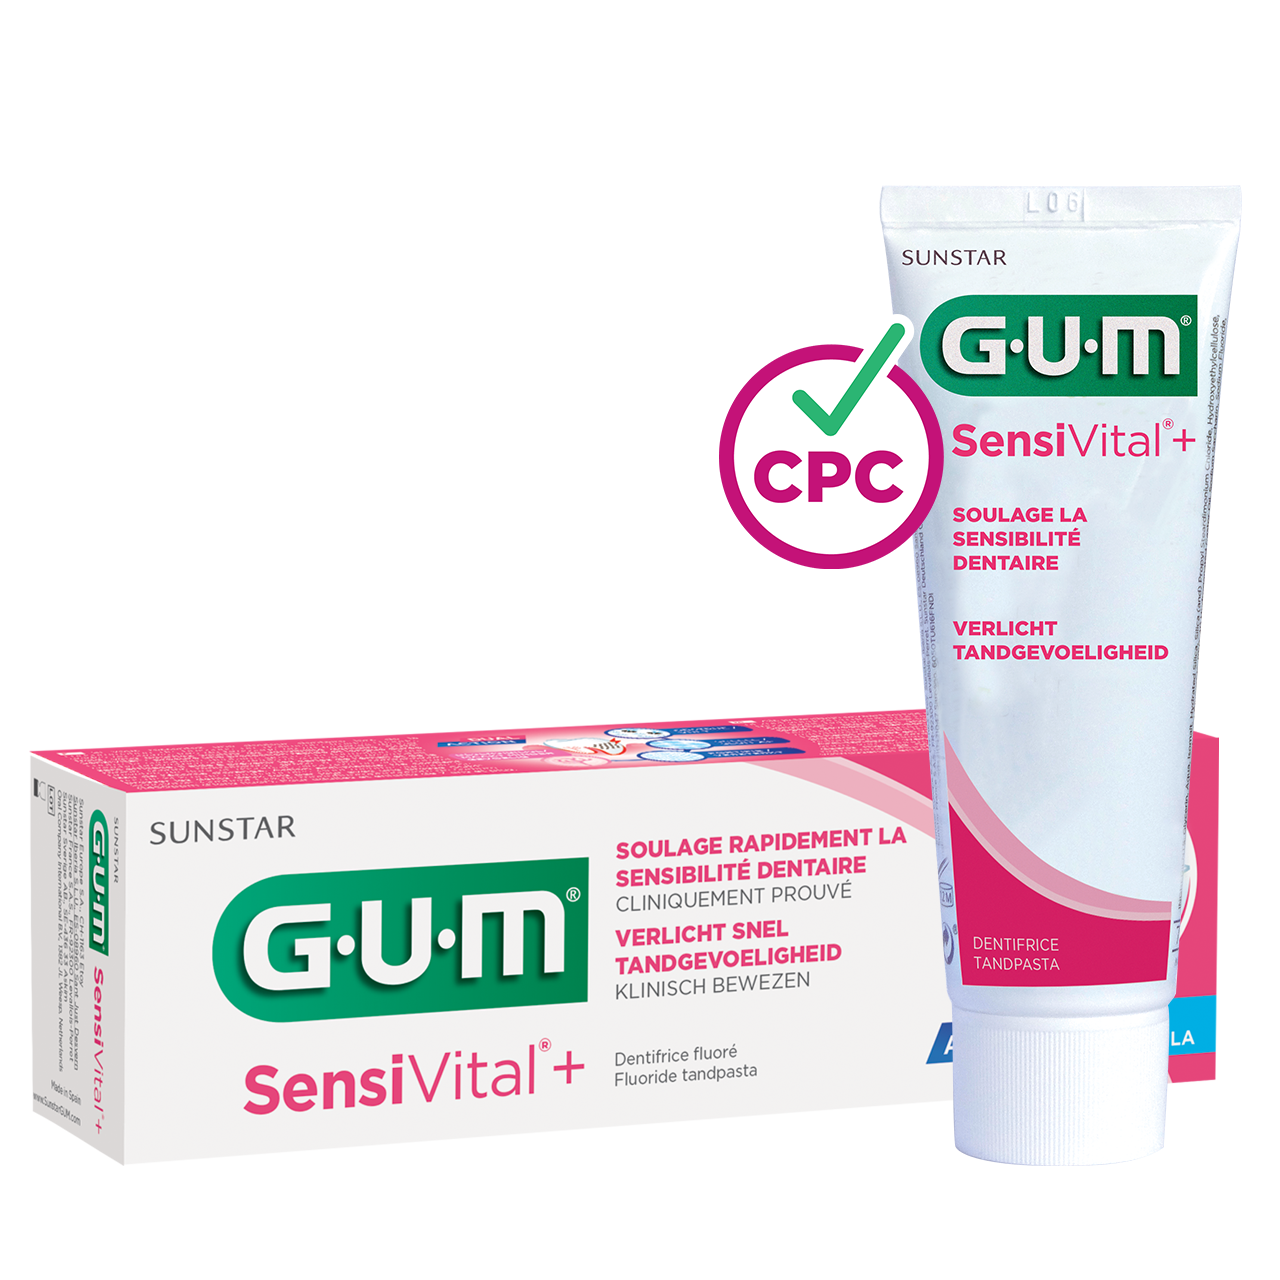 P6070-FR-NL-GUM-SensiVital-plus-Toothpaste-75ml-Box-Tube-CPC